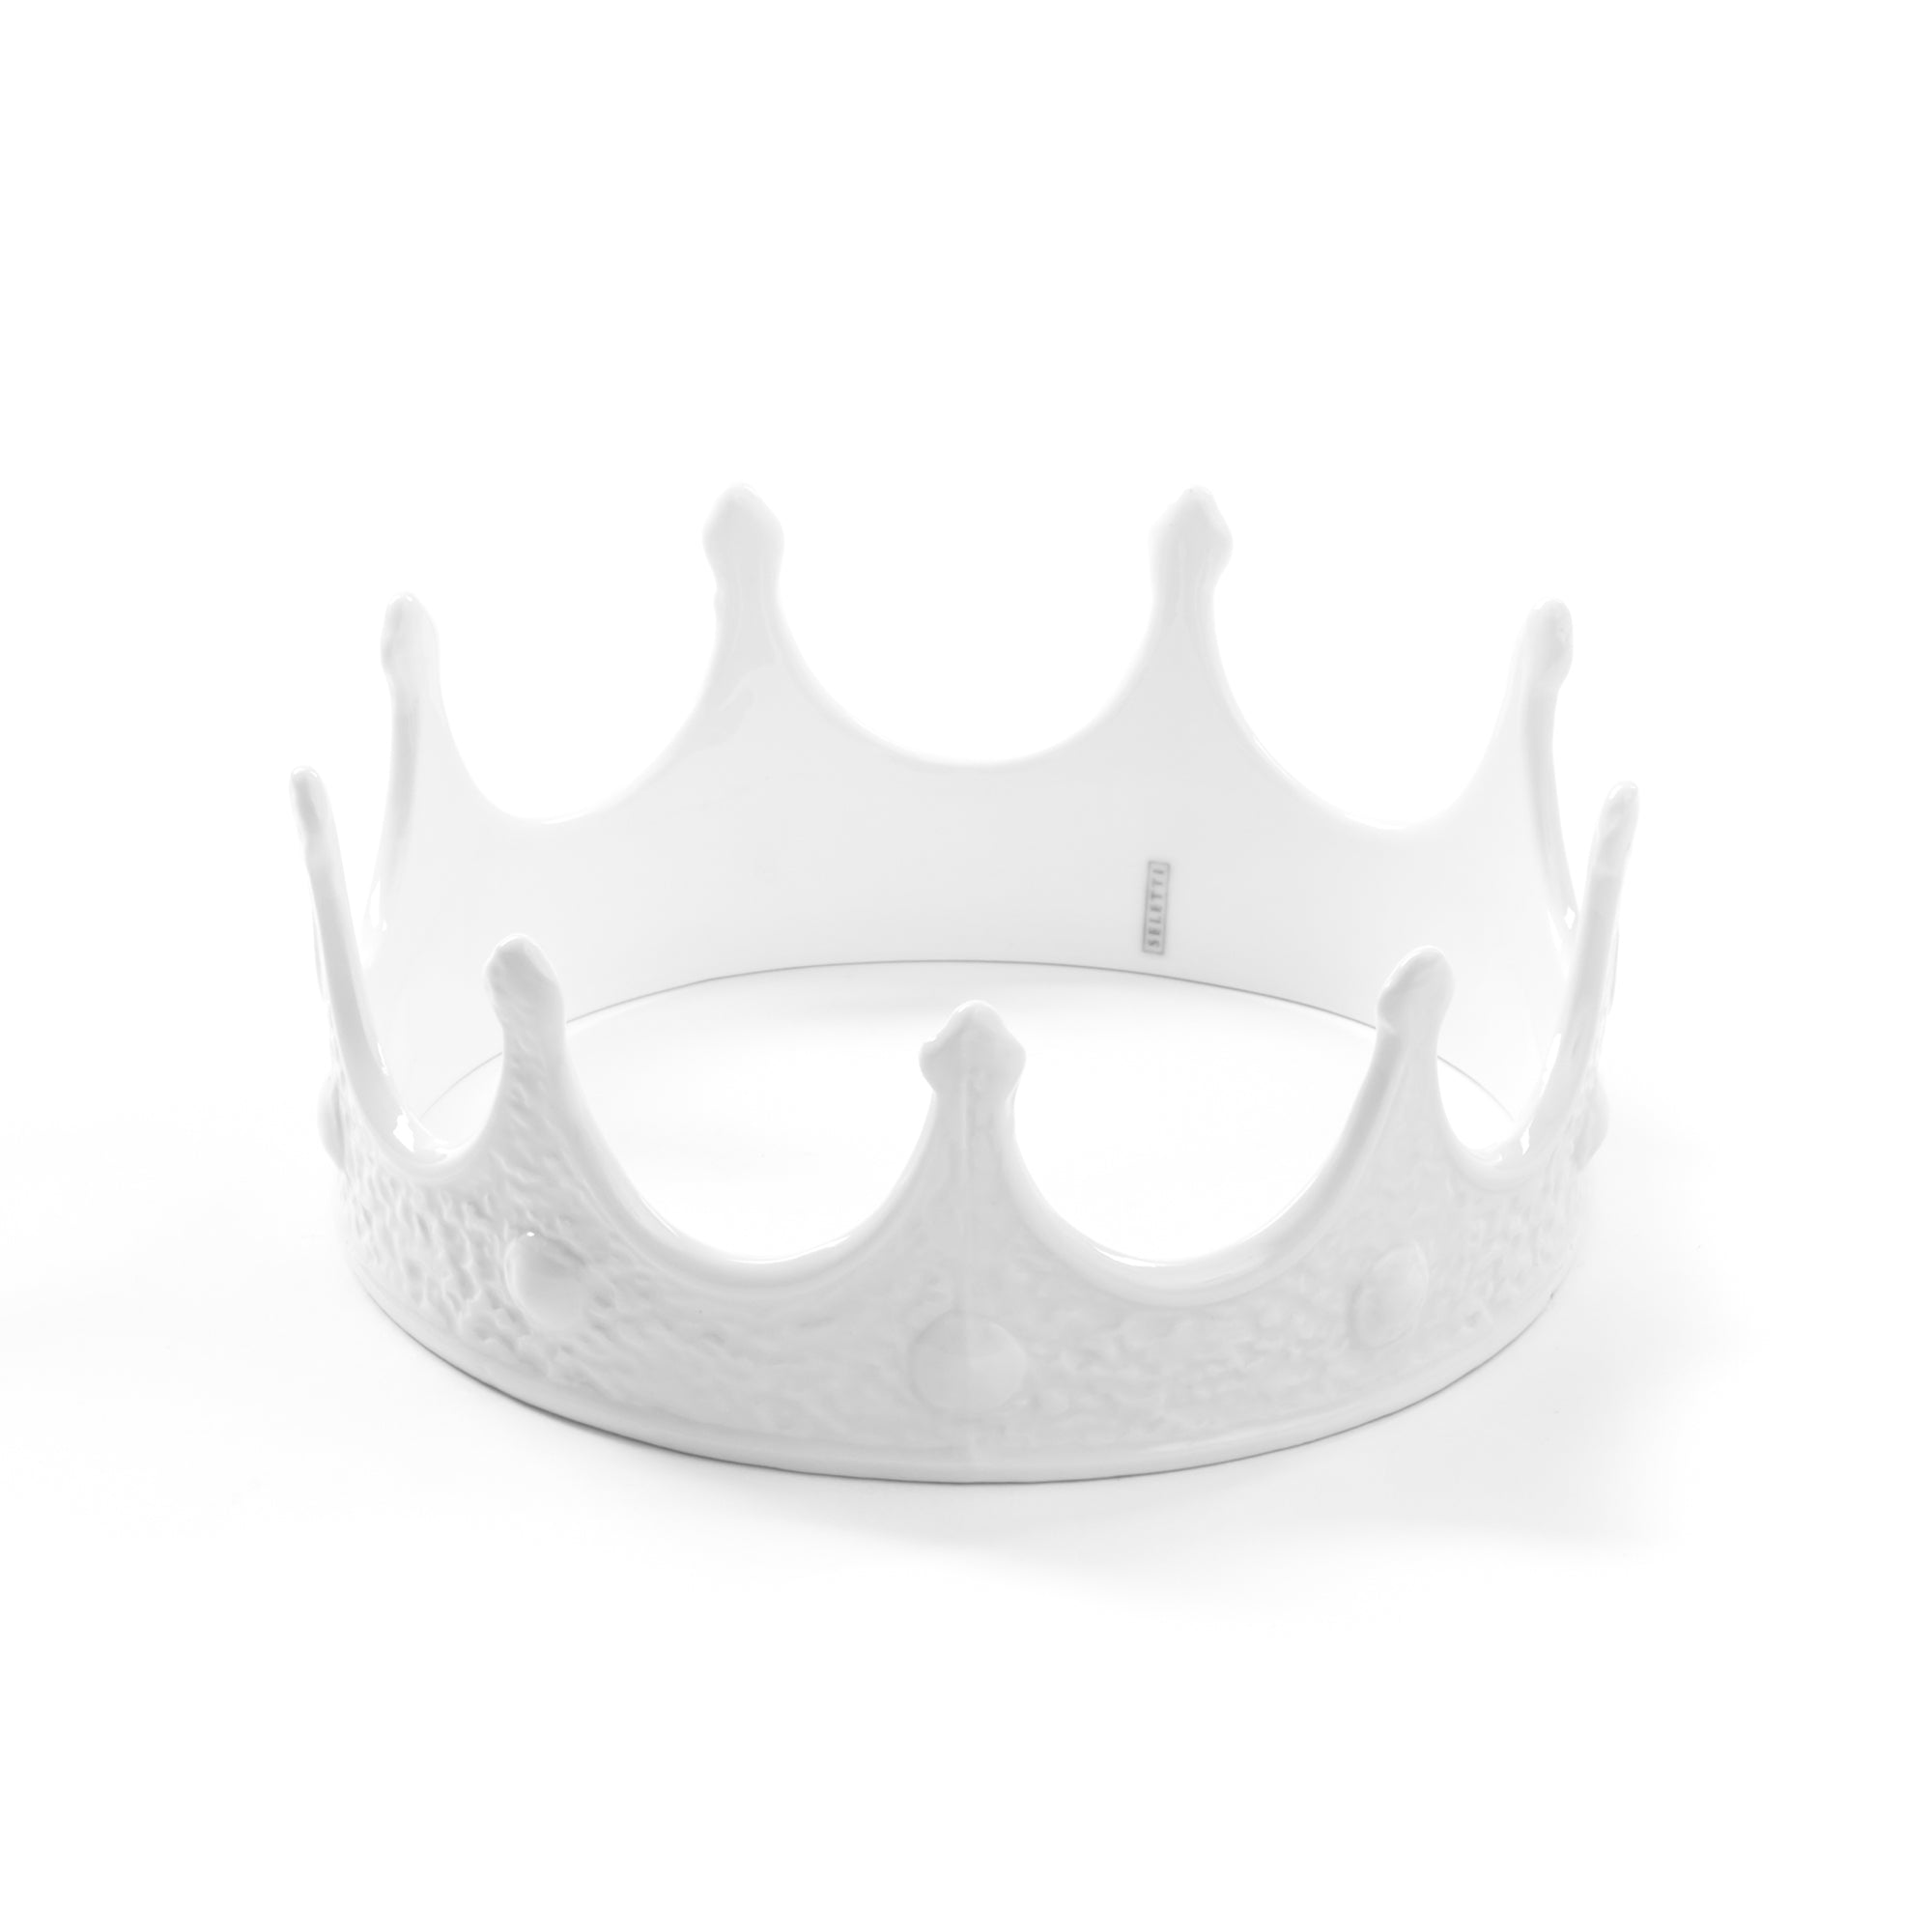 Seletti Memorabilia My porcelain crown